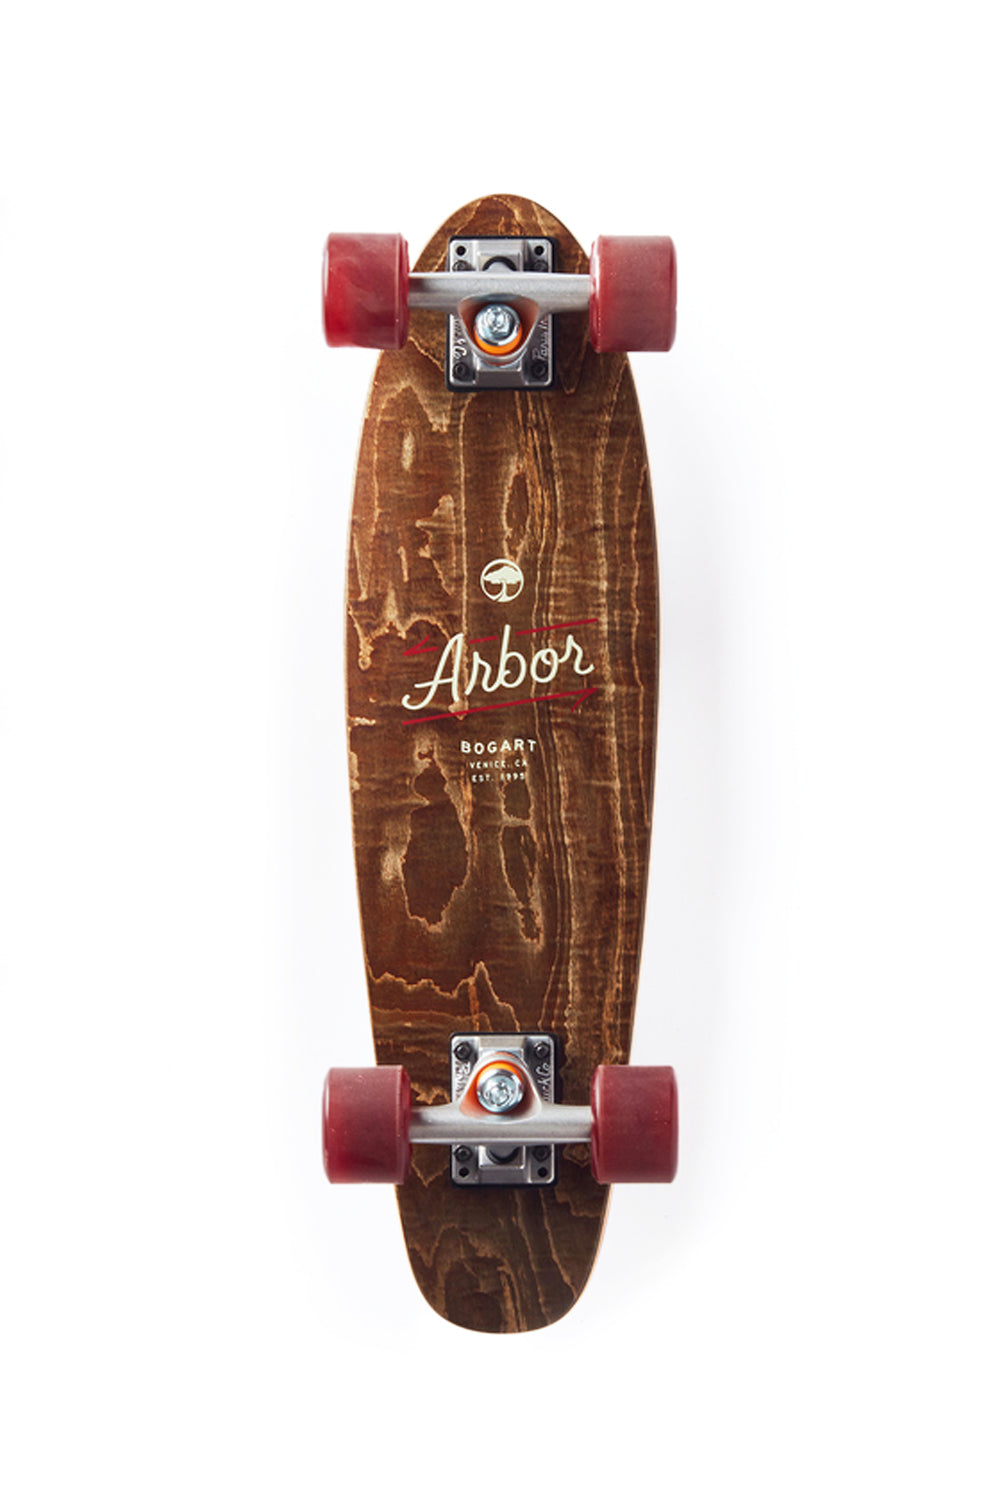 Arbor Micron Cruiser Cruiser Skateboard